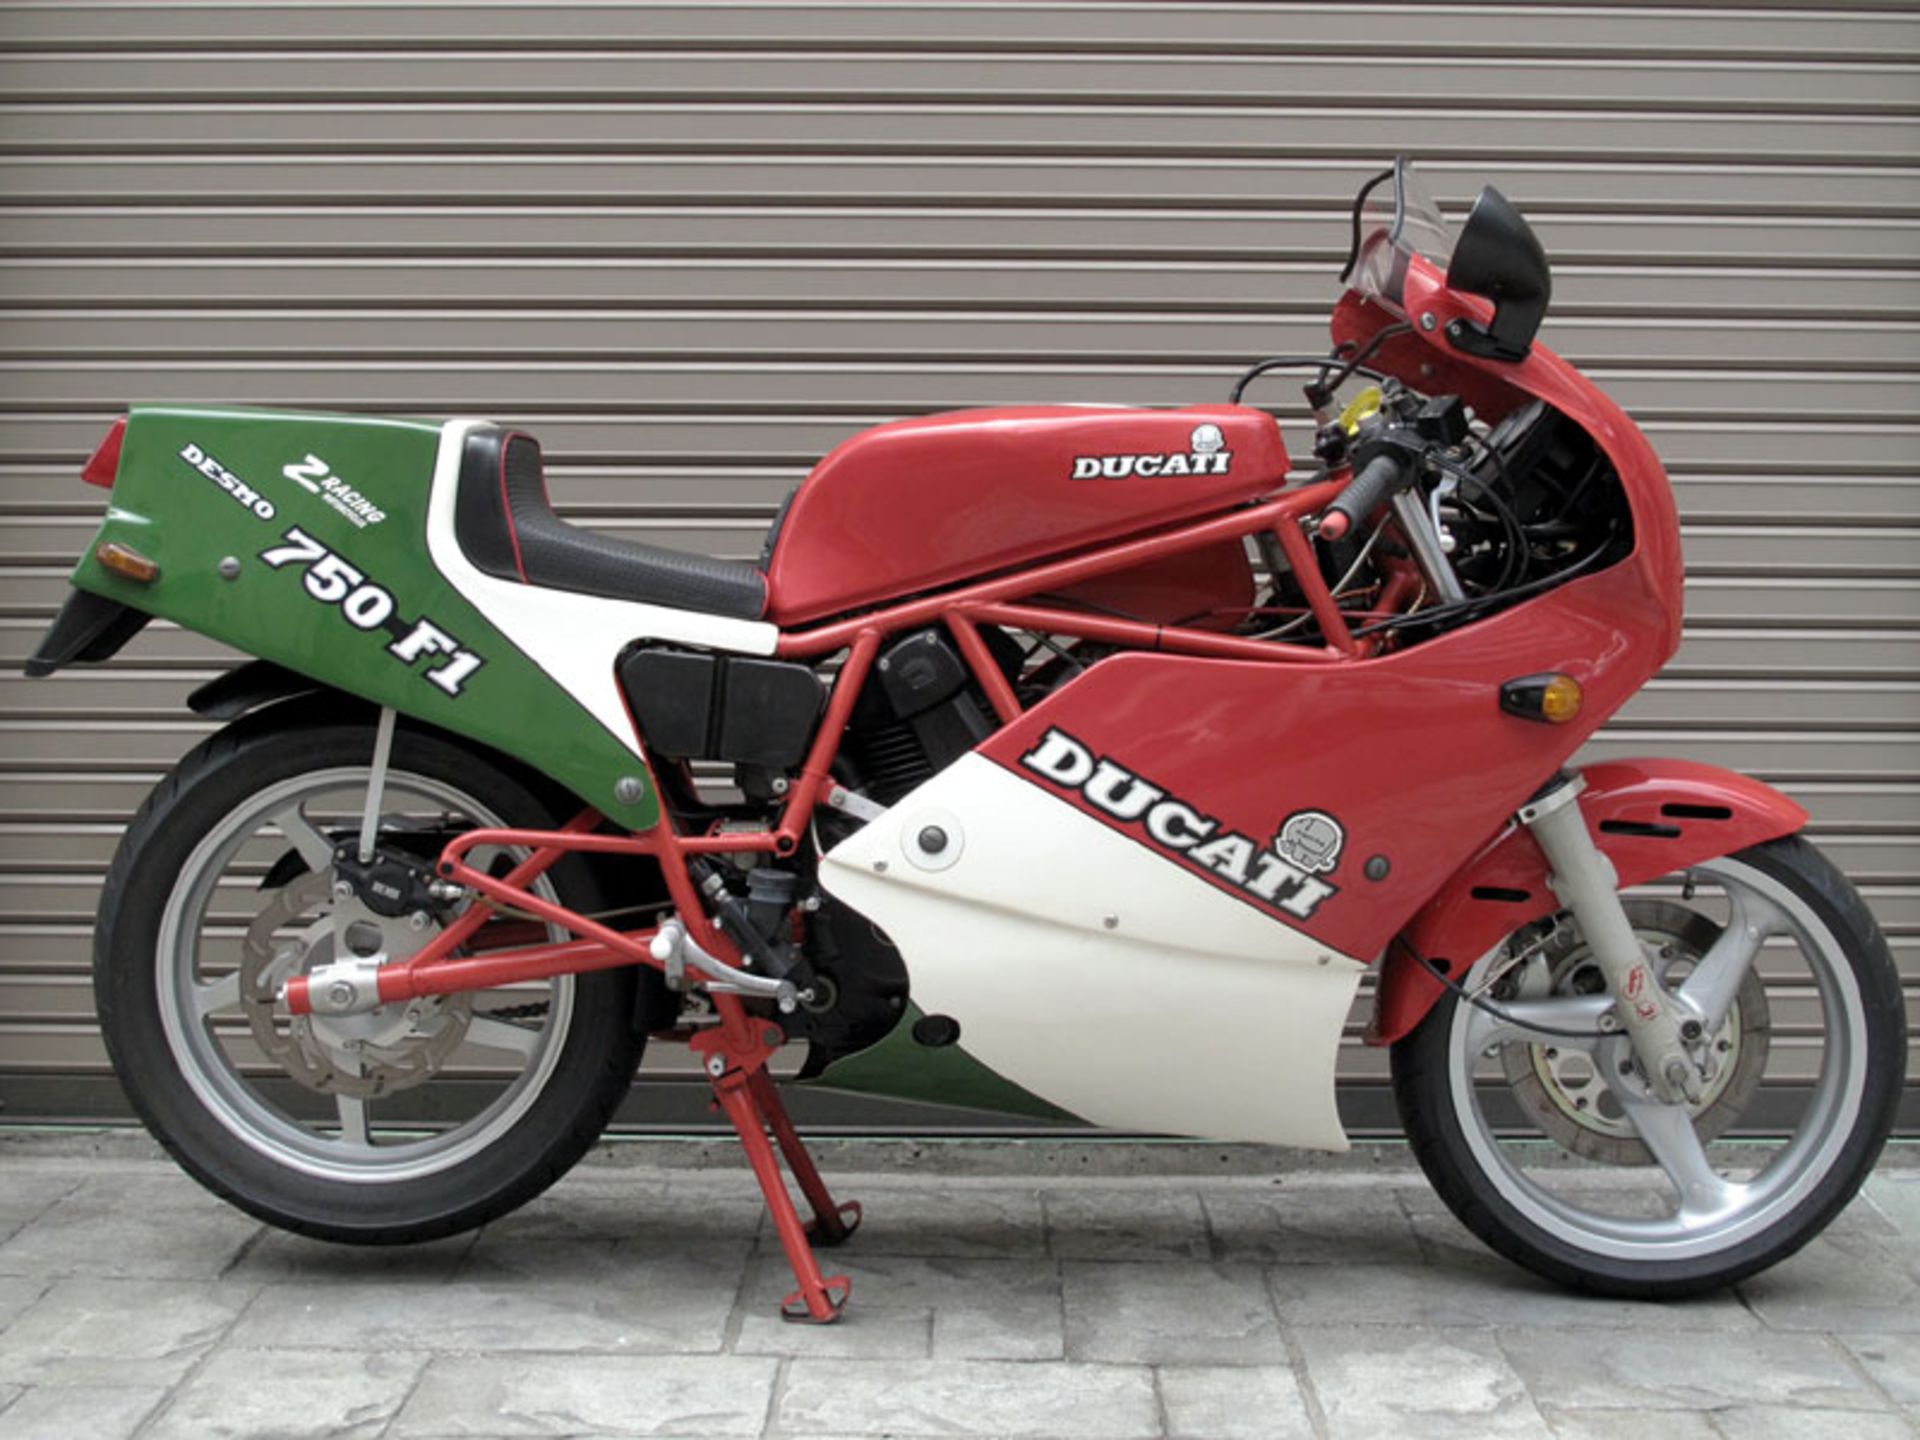 1986 Ducati 750 F1 - Image 2 of 4